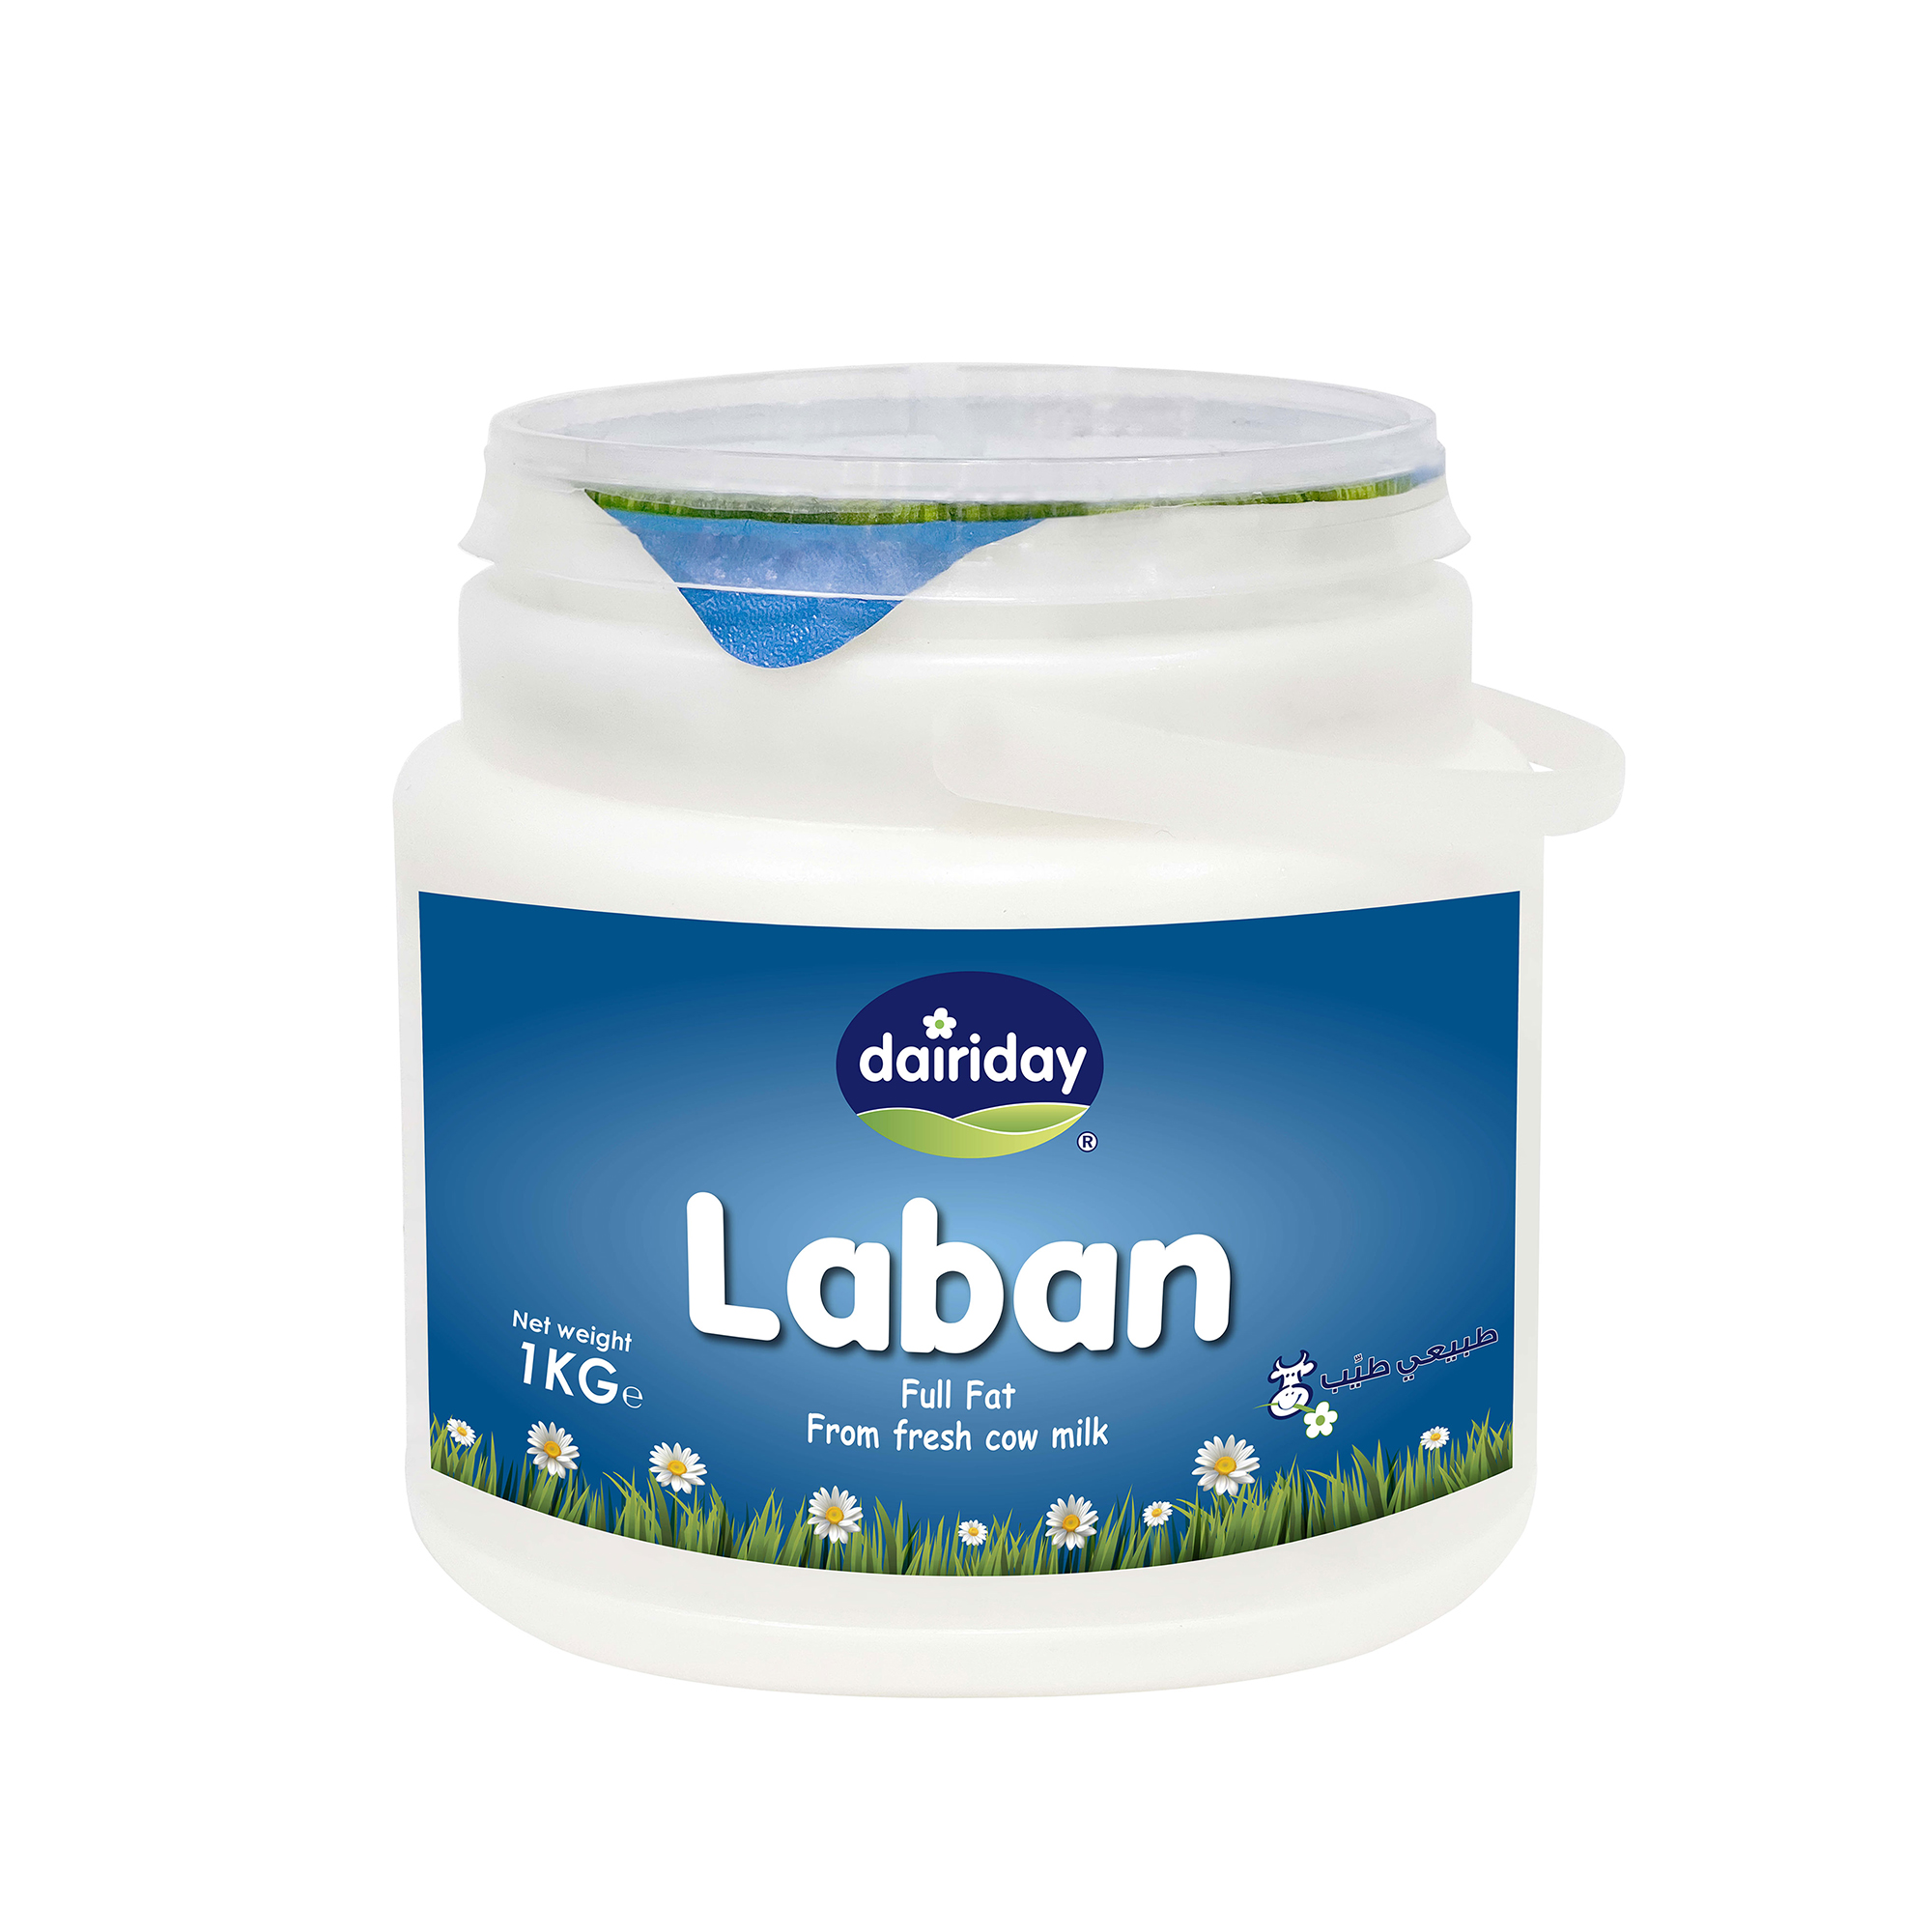 Dairiday-Laban-1kg